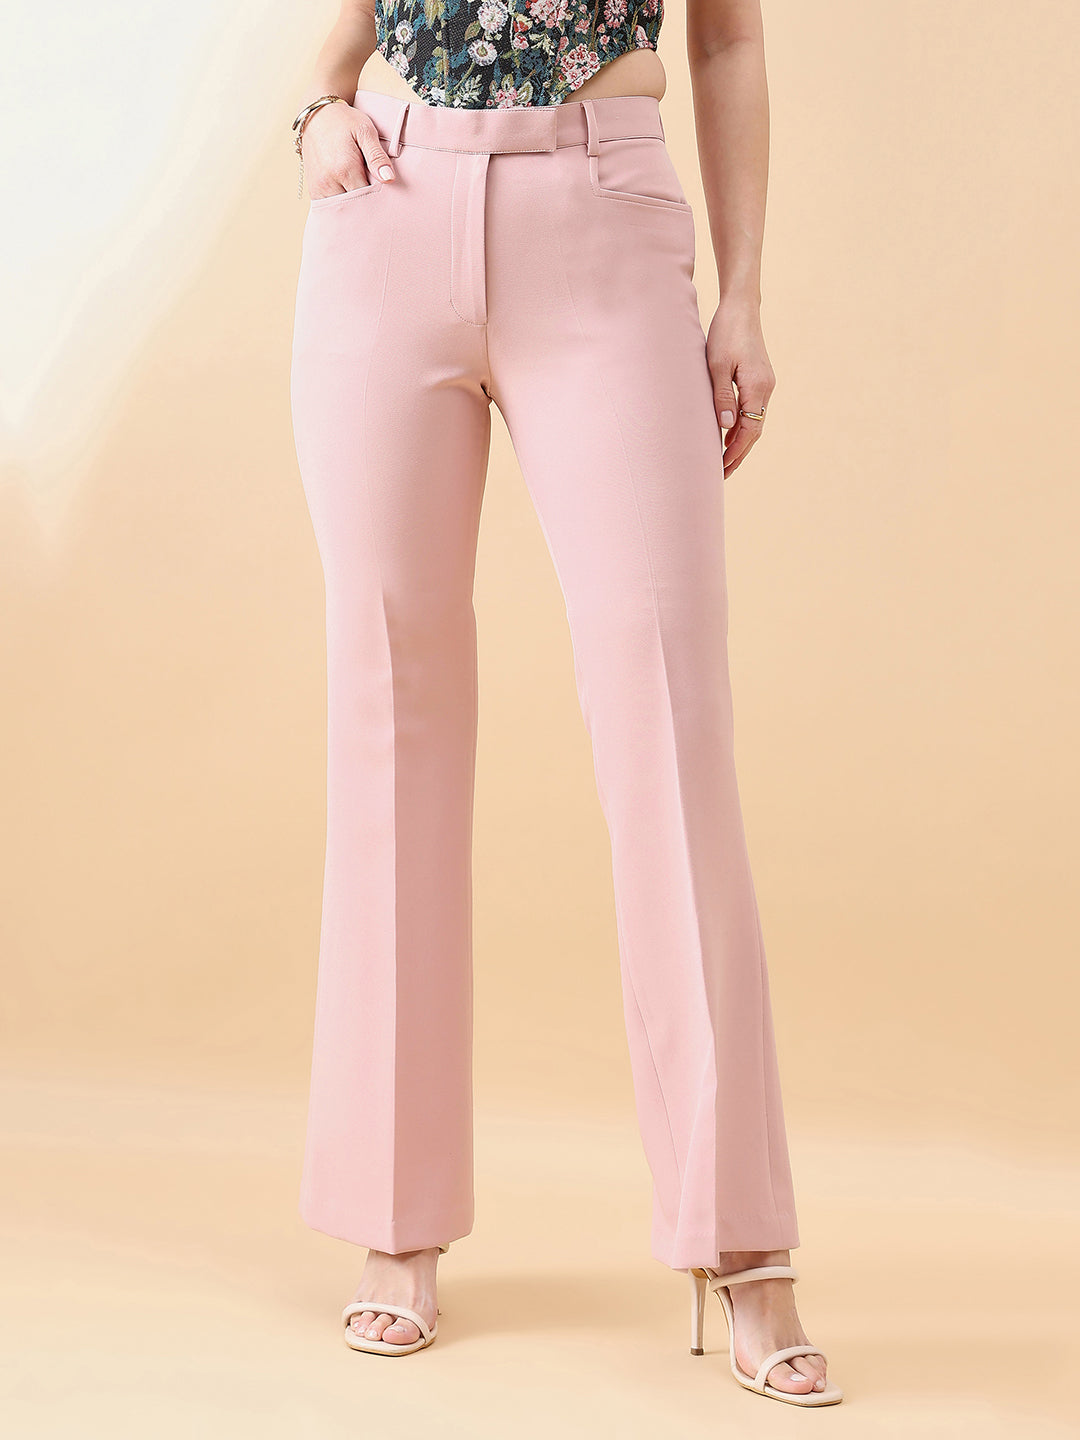 Pink-Polyester-&-Viscose-Blend-Belly-Bottom-Stretch-Pants